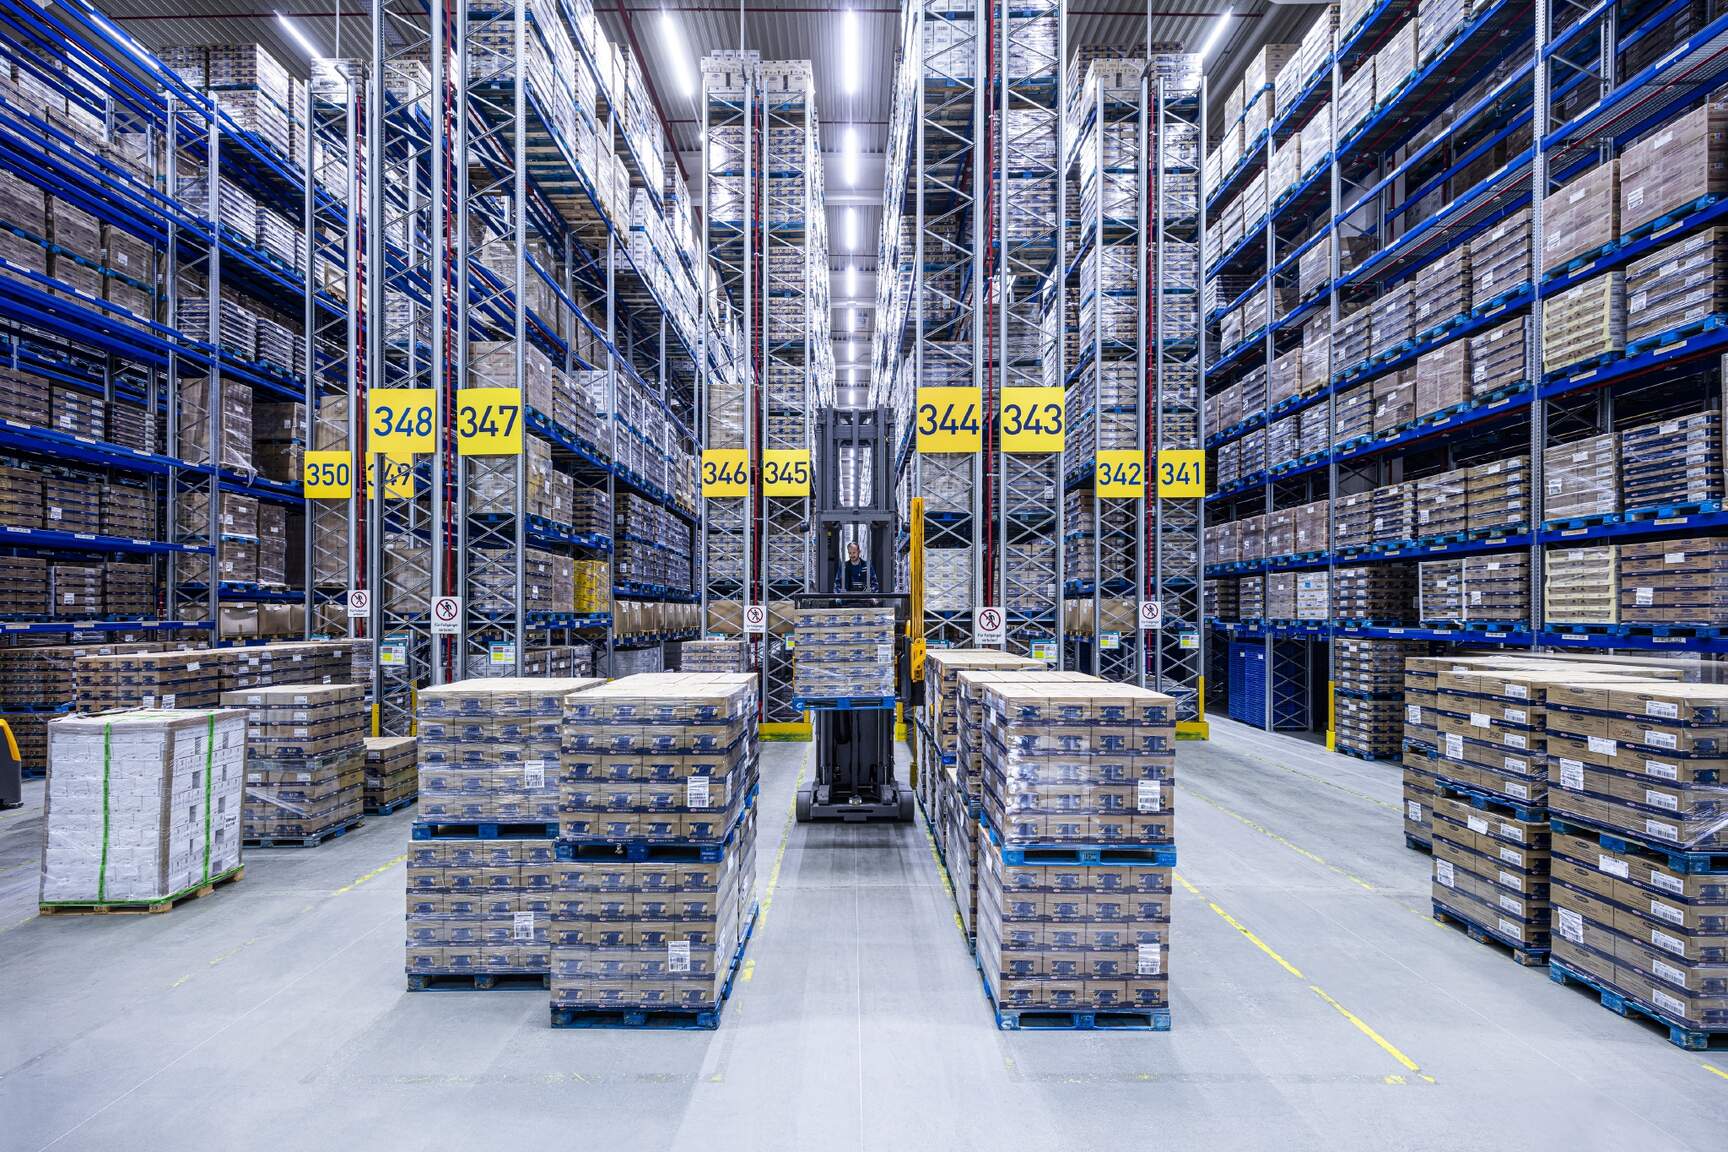 DACHSER USA proporciona capacidades de administración de inventario con procesamiento diario de envíos a centros logísticos de comercio electrónico en todo Estados Unidos.